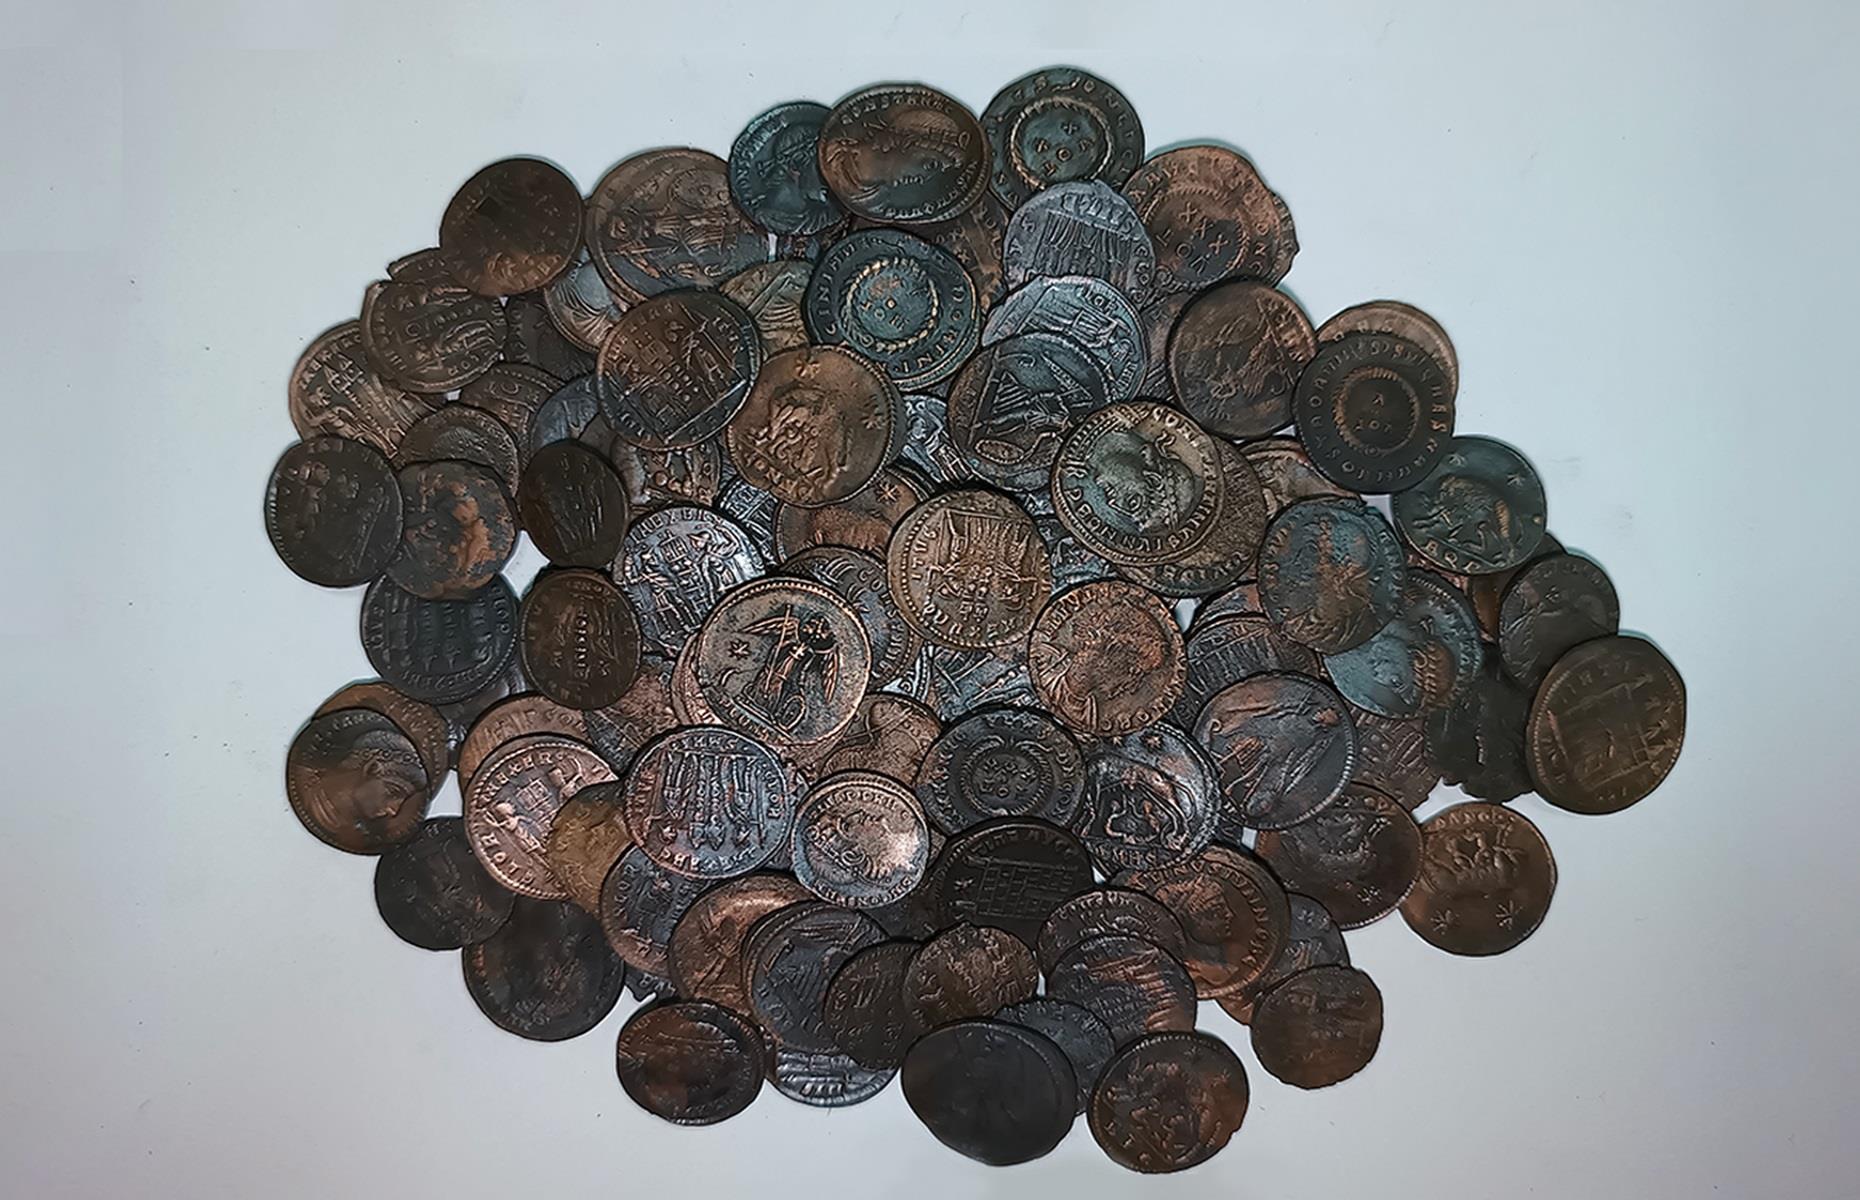 50,000 Roman coins – value unknown